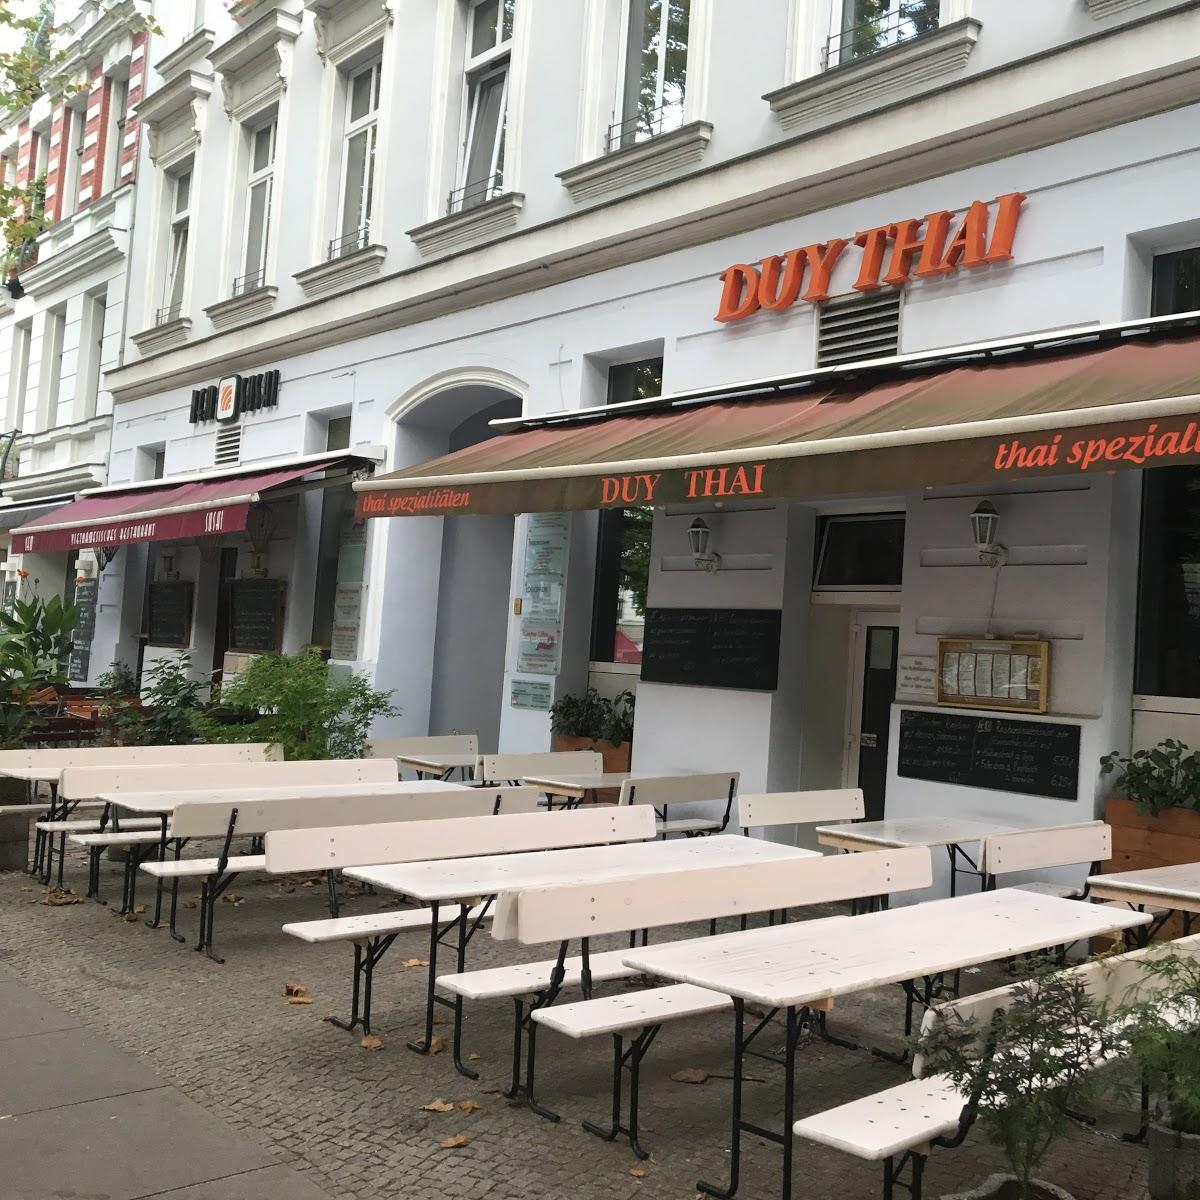 Restaurant "Duy Thai" in Berlin